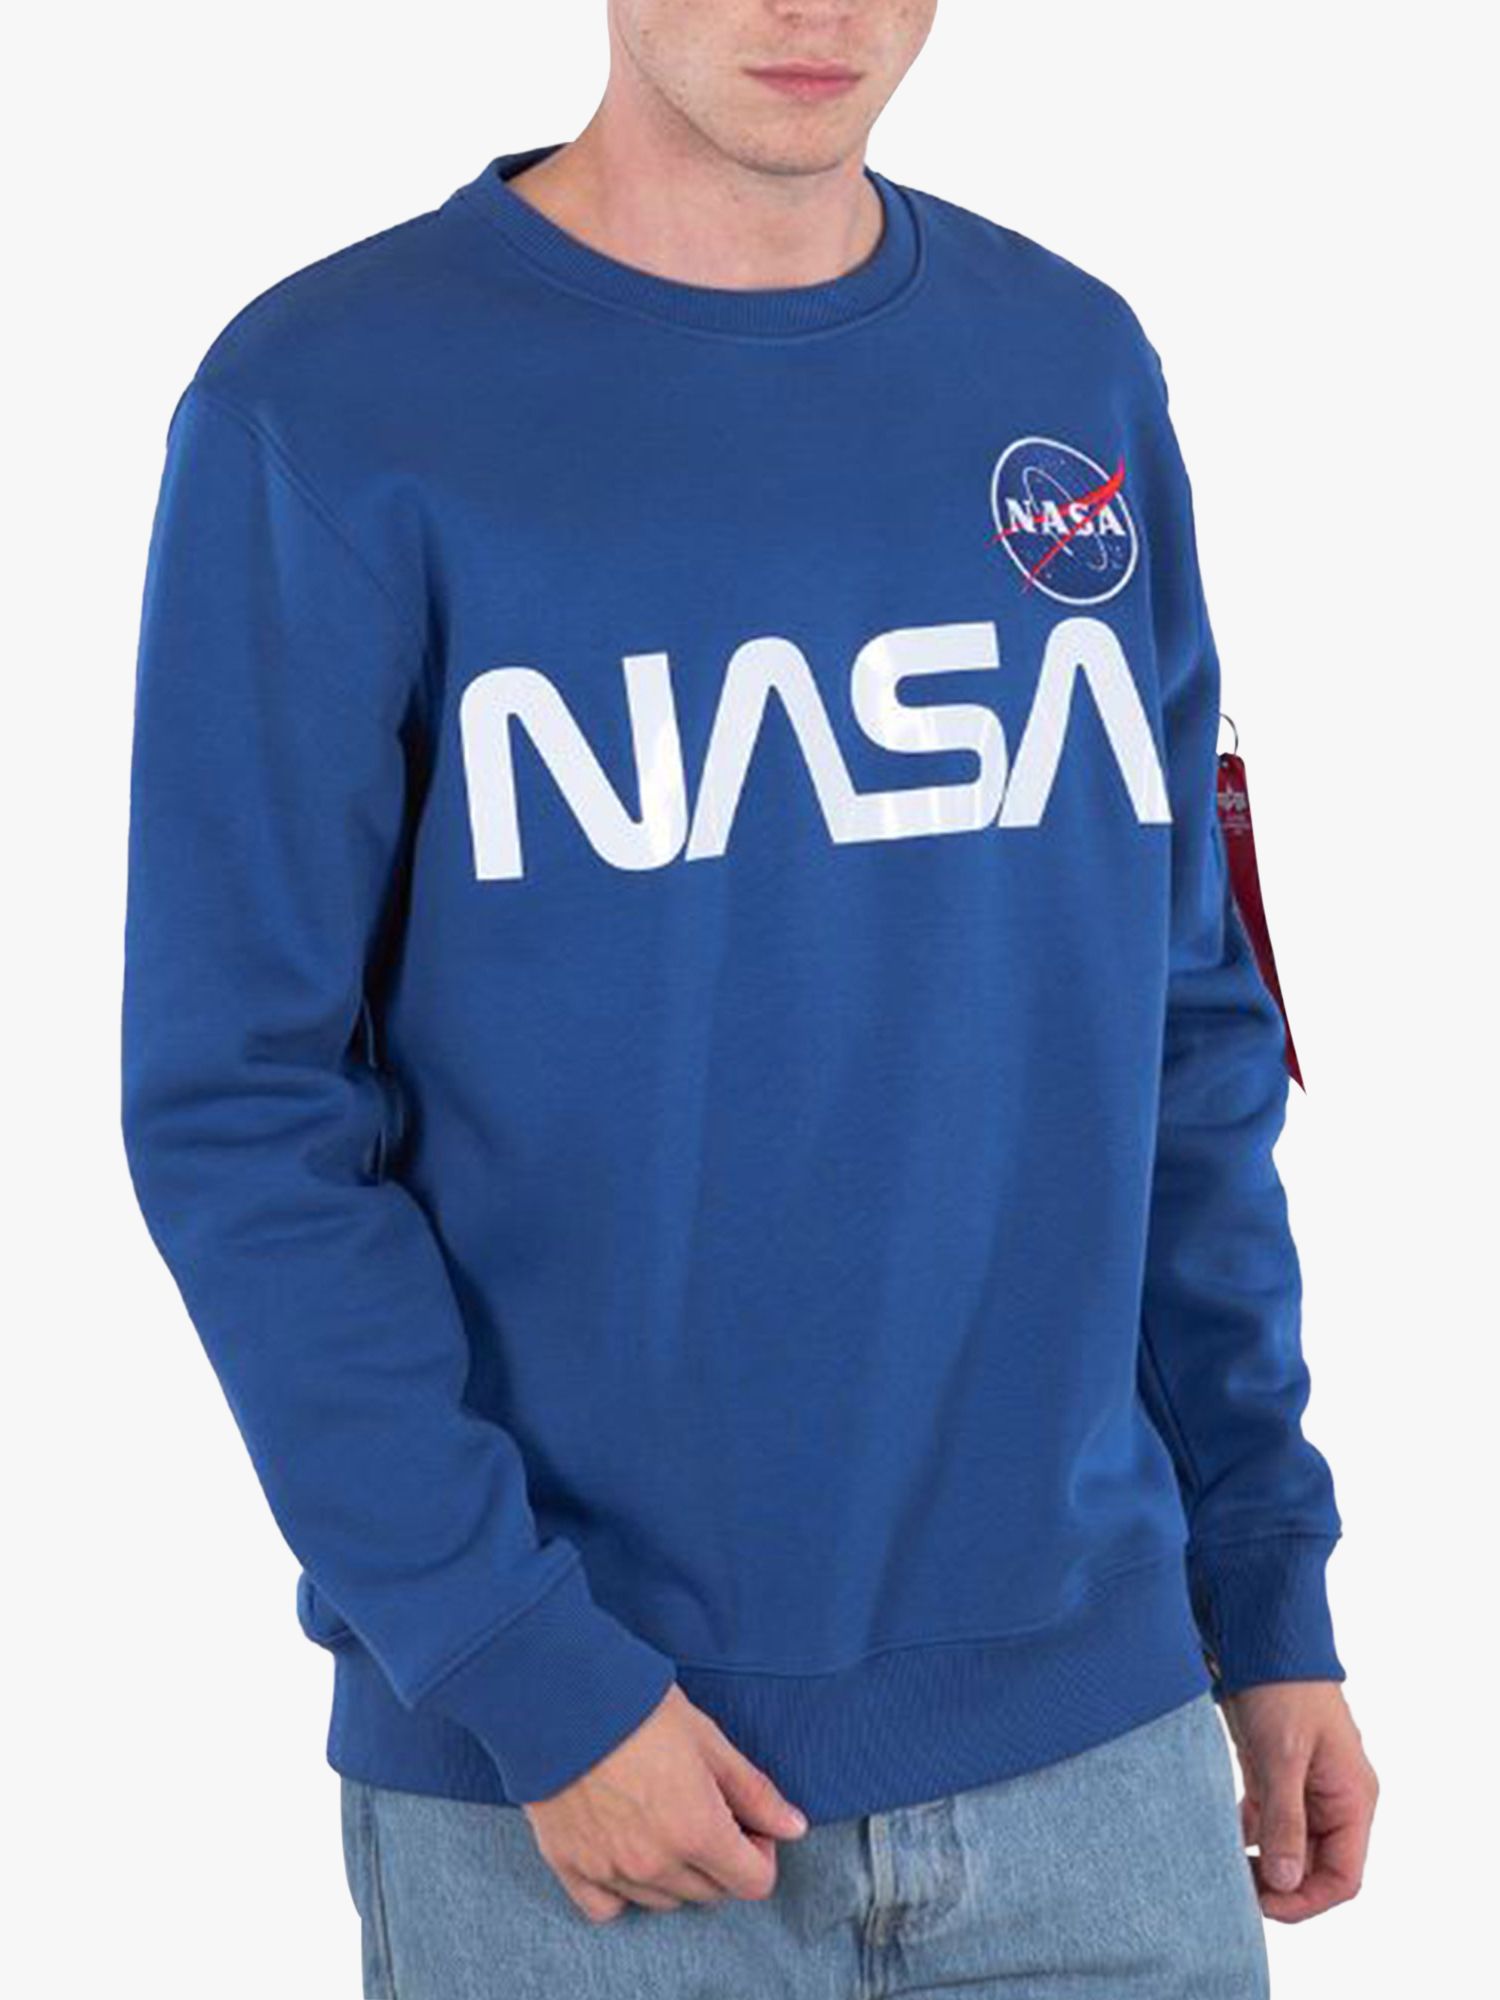 Alpha Industries NASA Reflective Graphic Sweatshirt, Blue, S